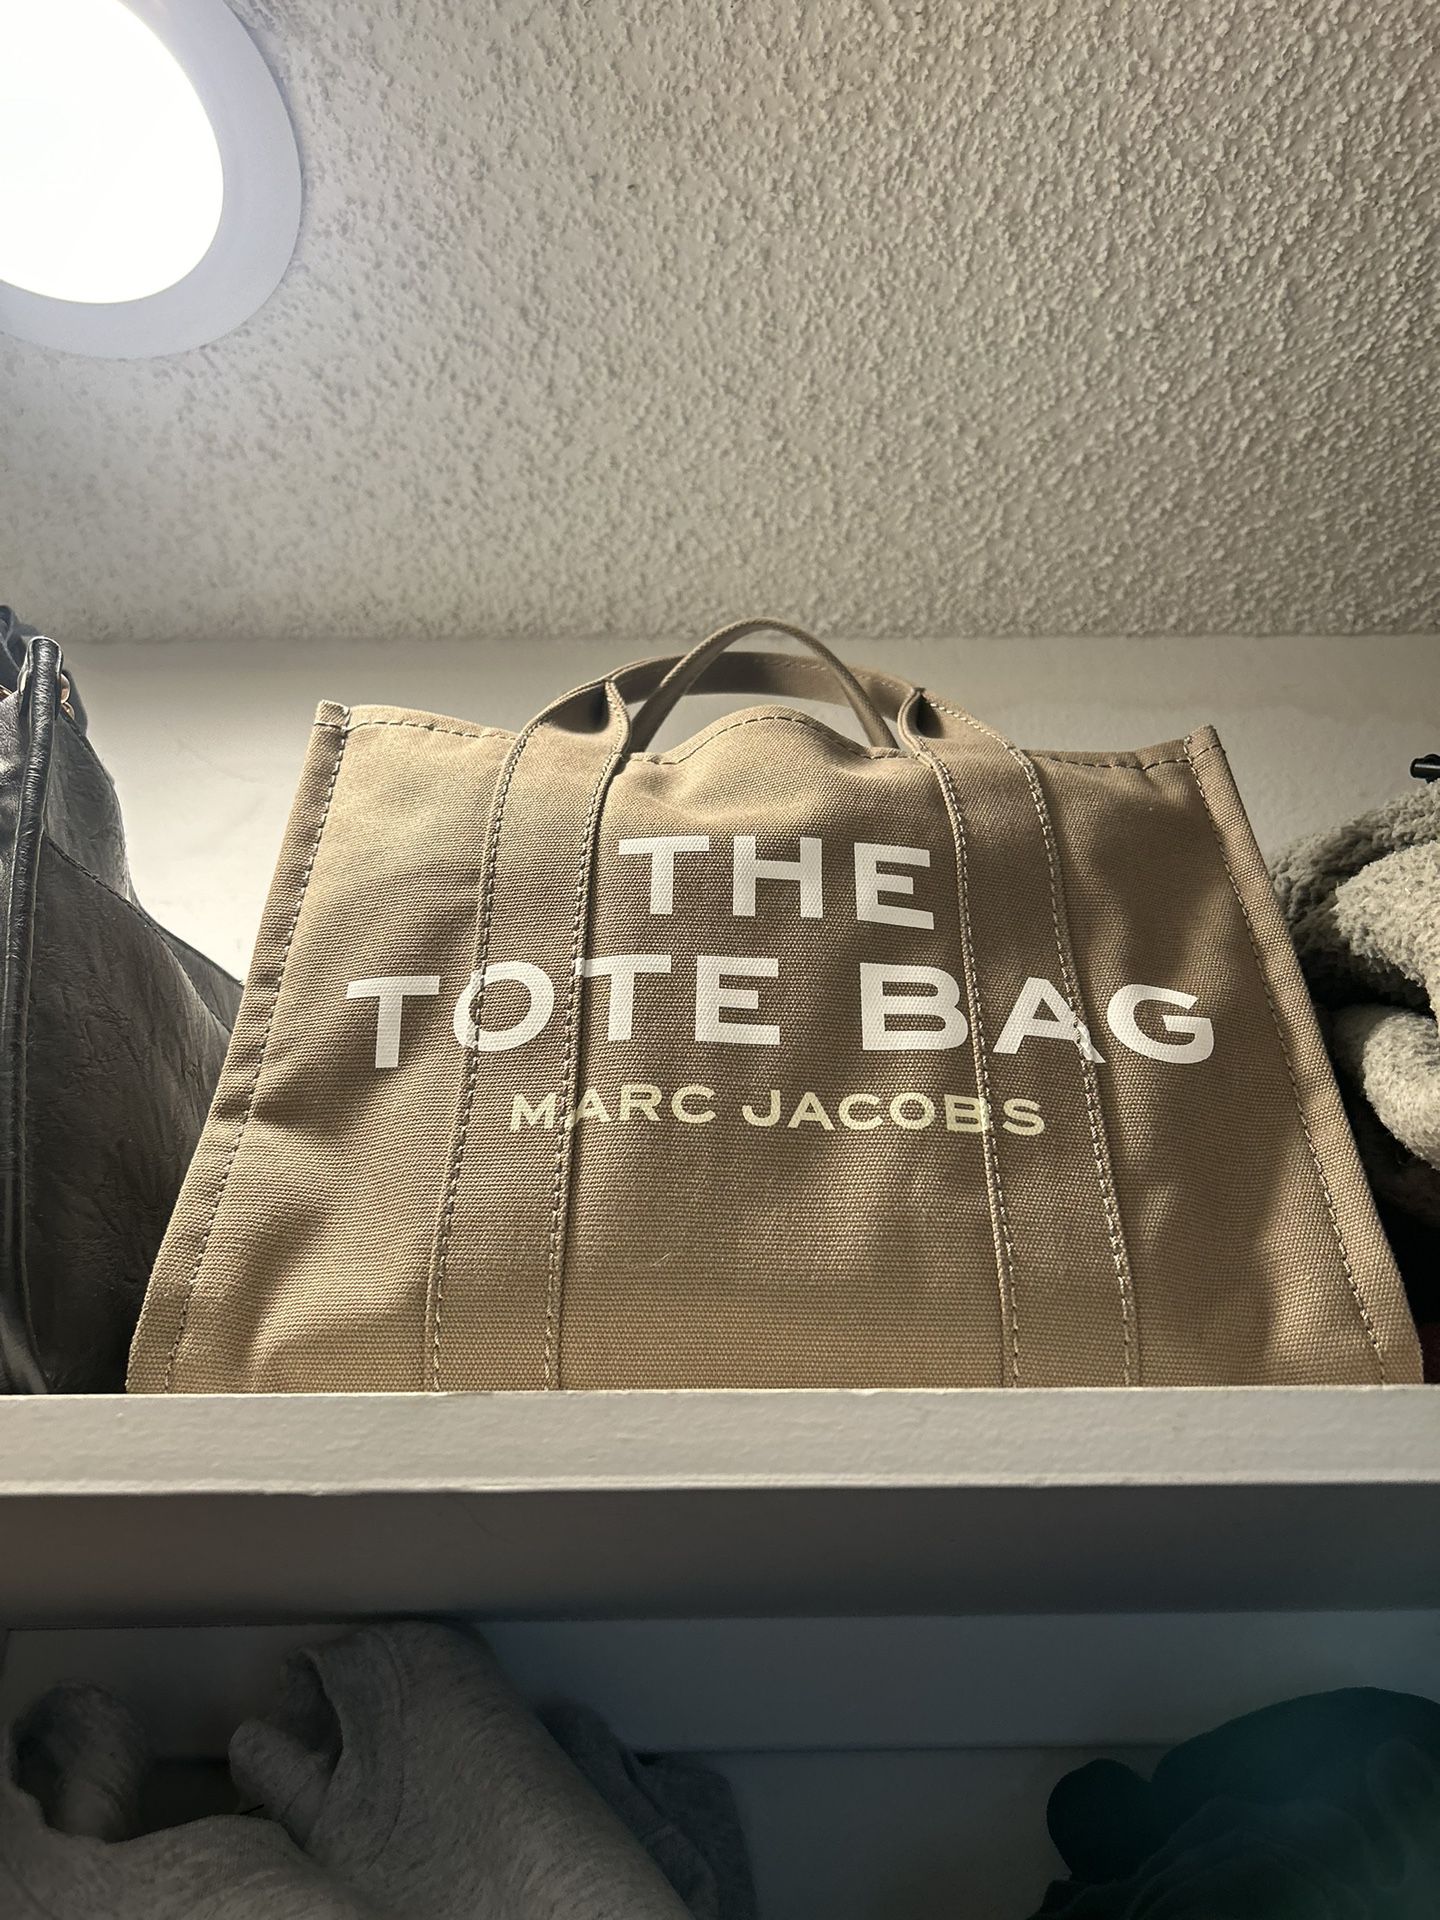 The Tote Bag